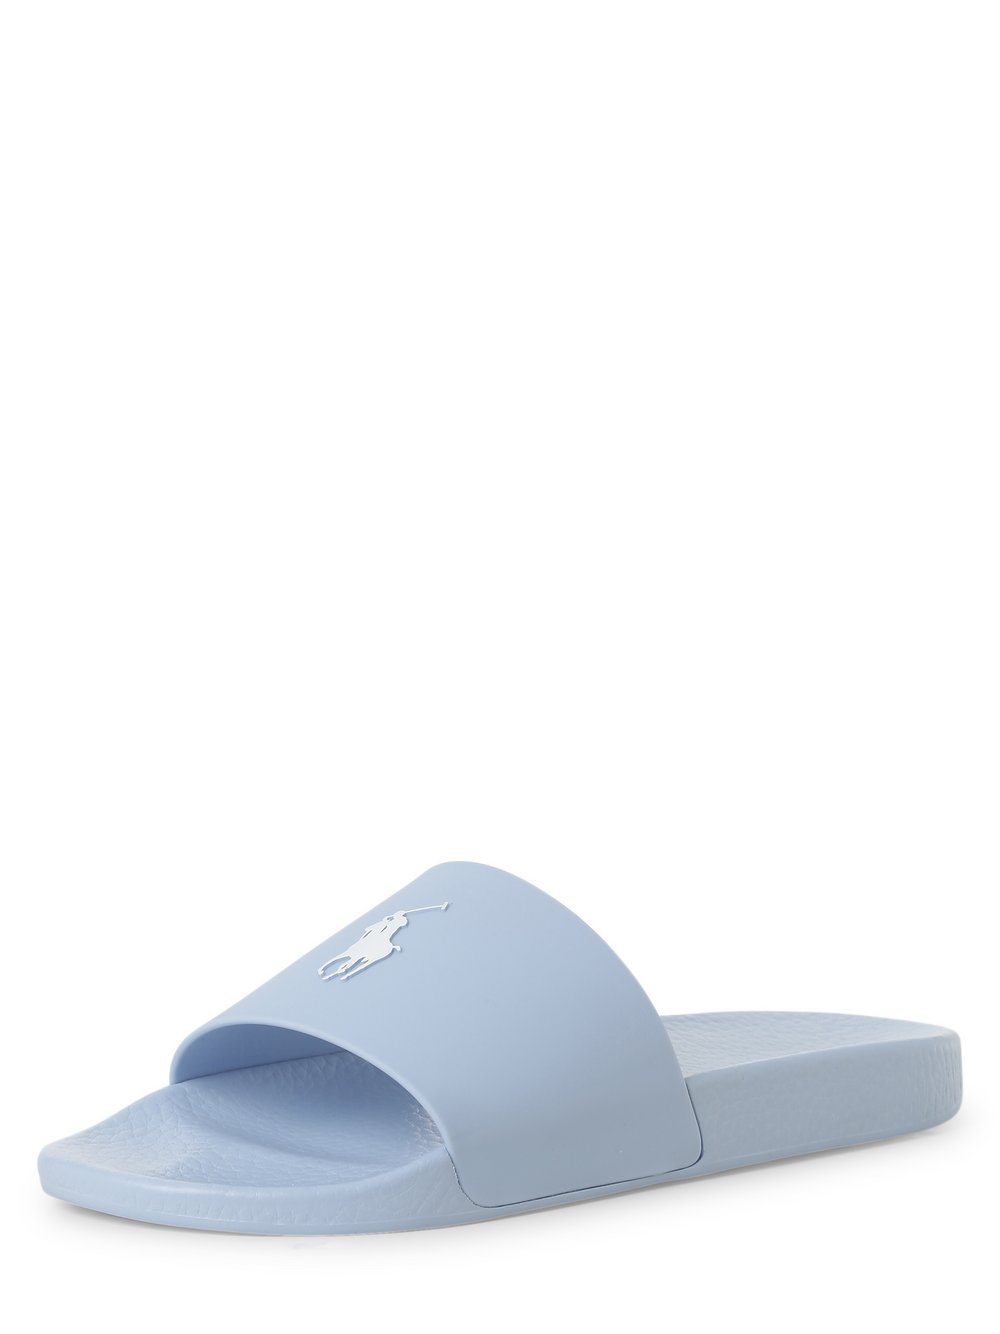 Polo Ralph Lauren - Męskie pantofle kąpielowe, niebieski